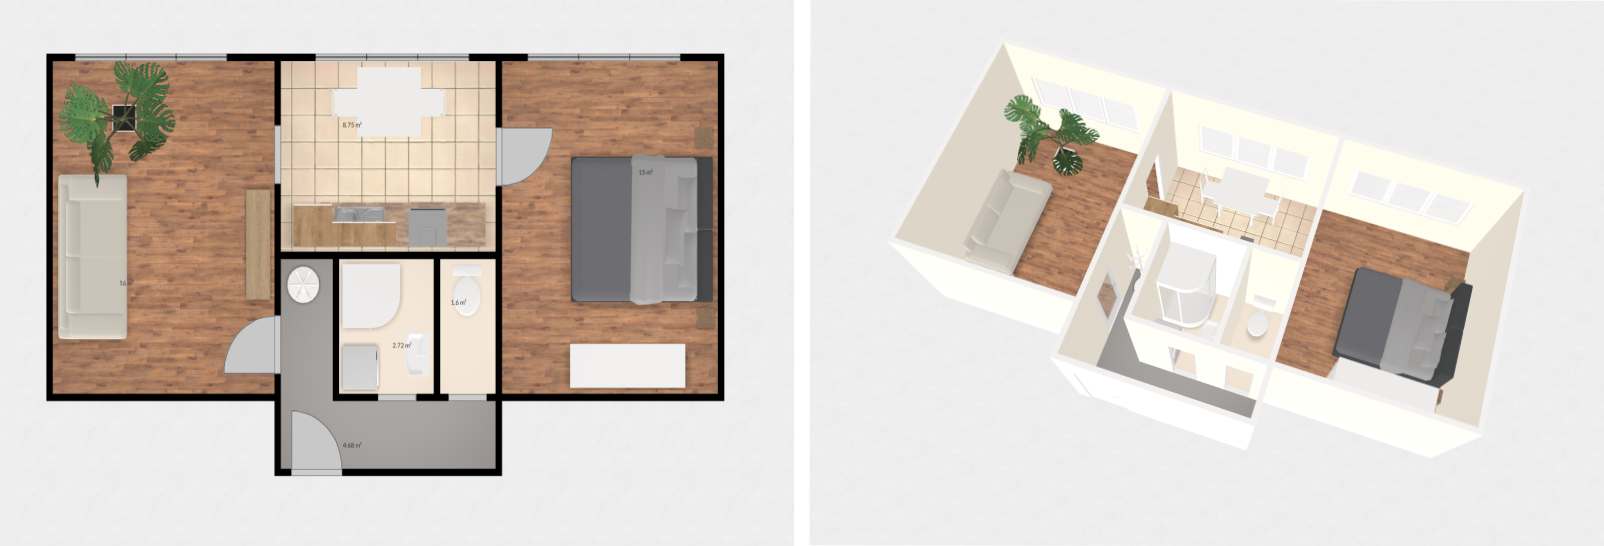 floorplan_both